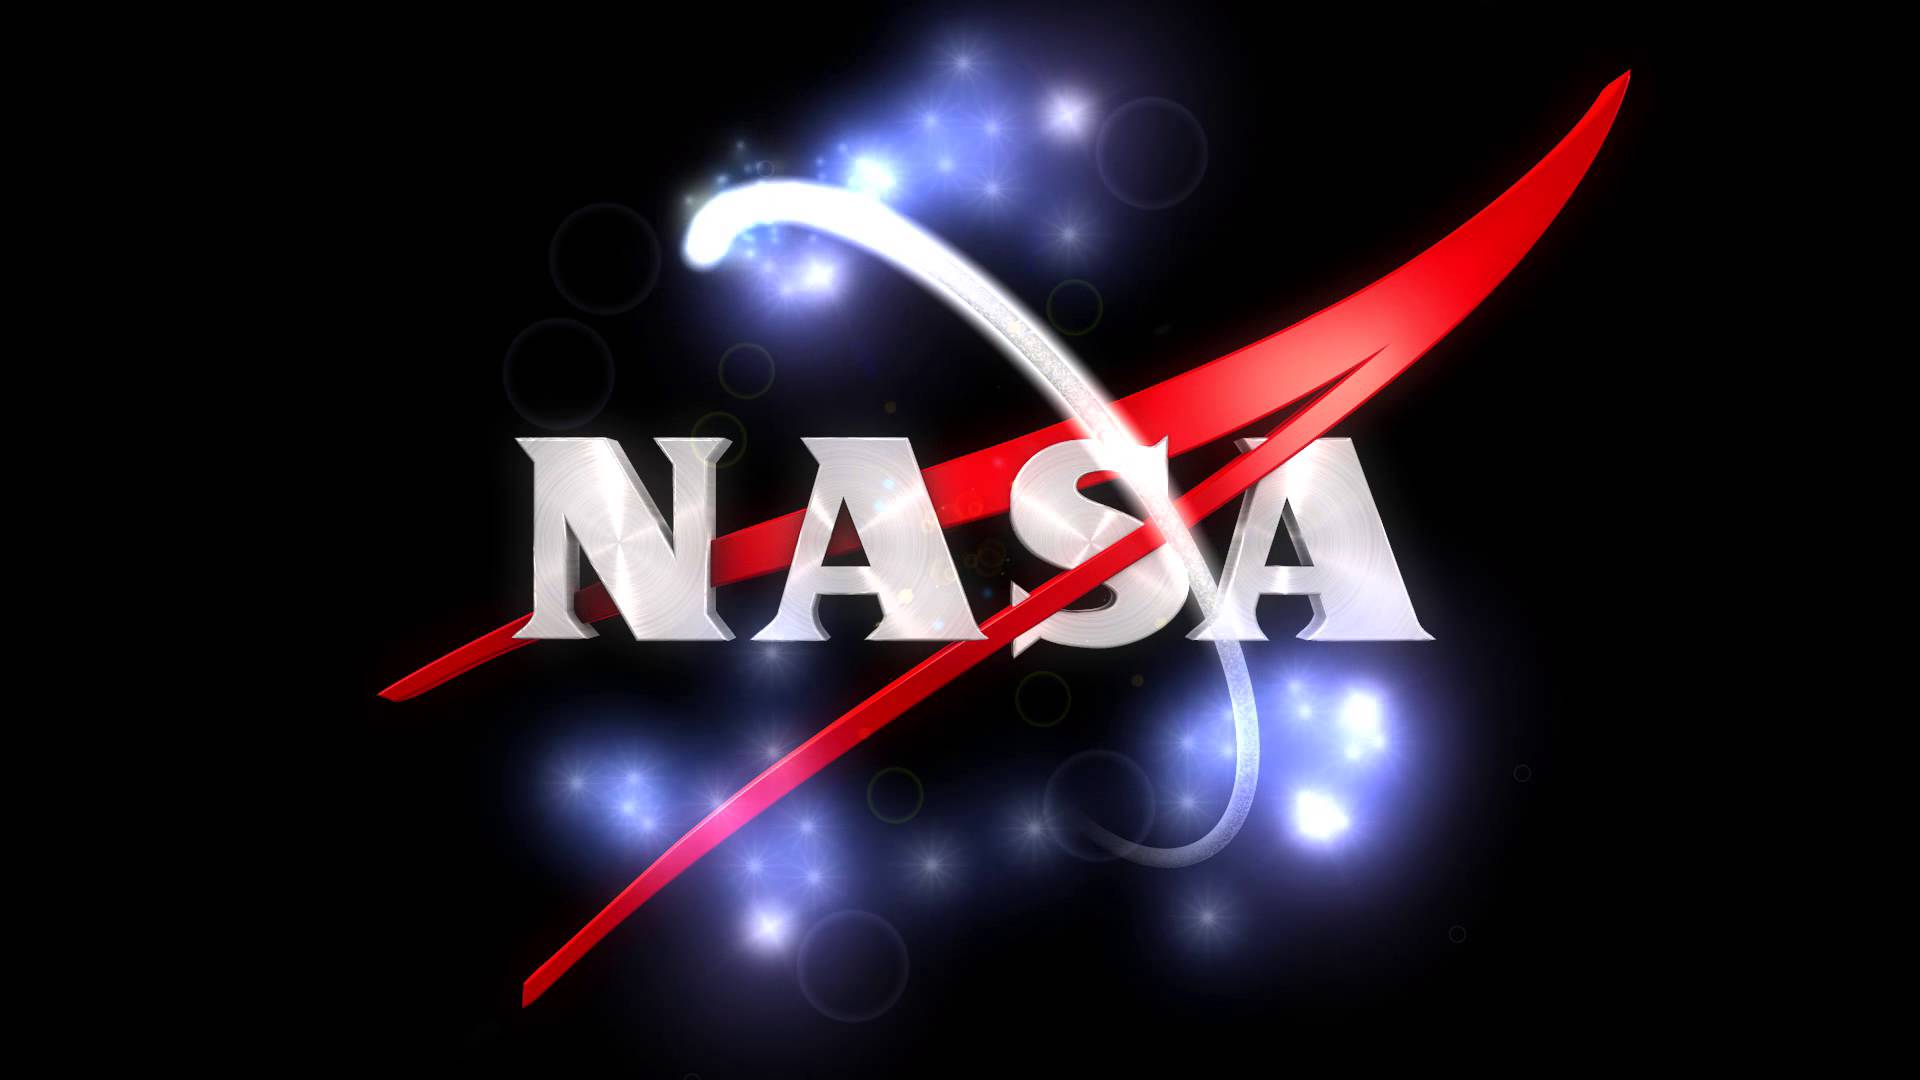 Cool NASA Logo - Nasa Logo Wallpaper - WallpaperSafari